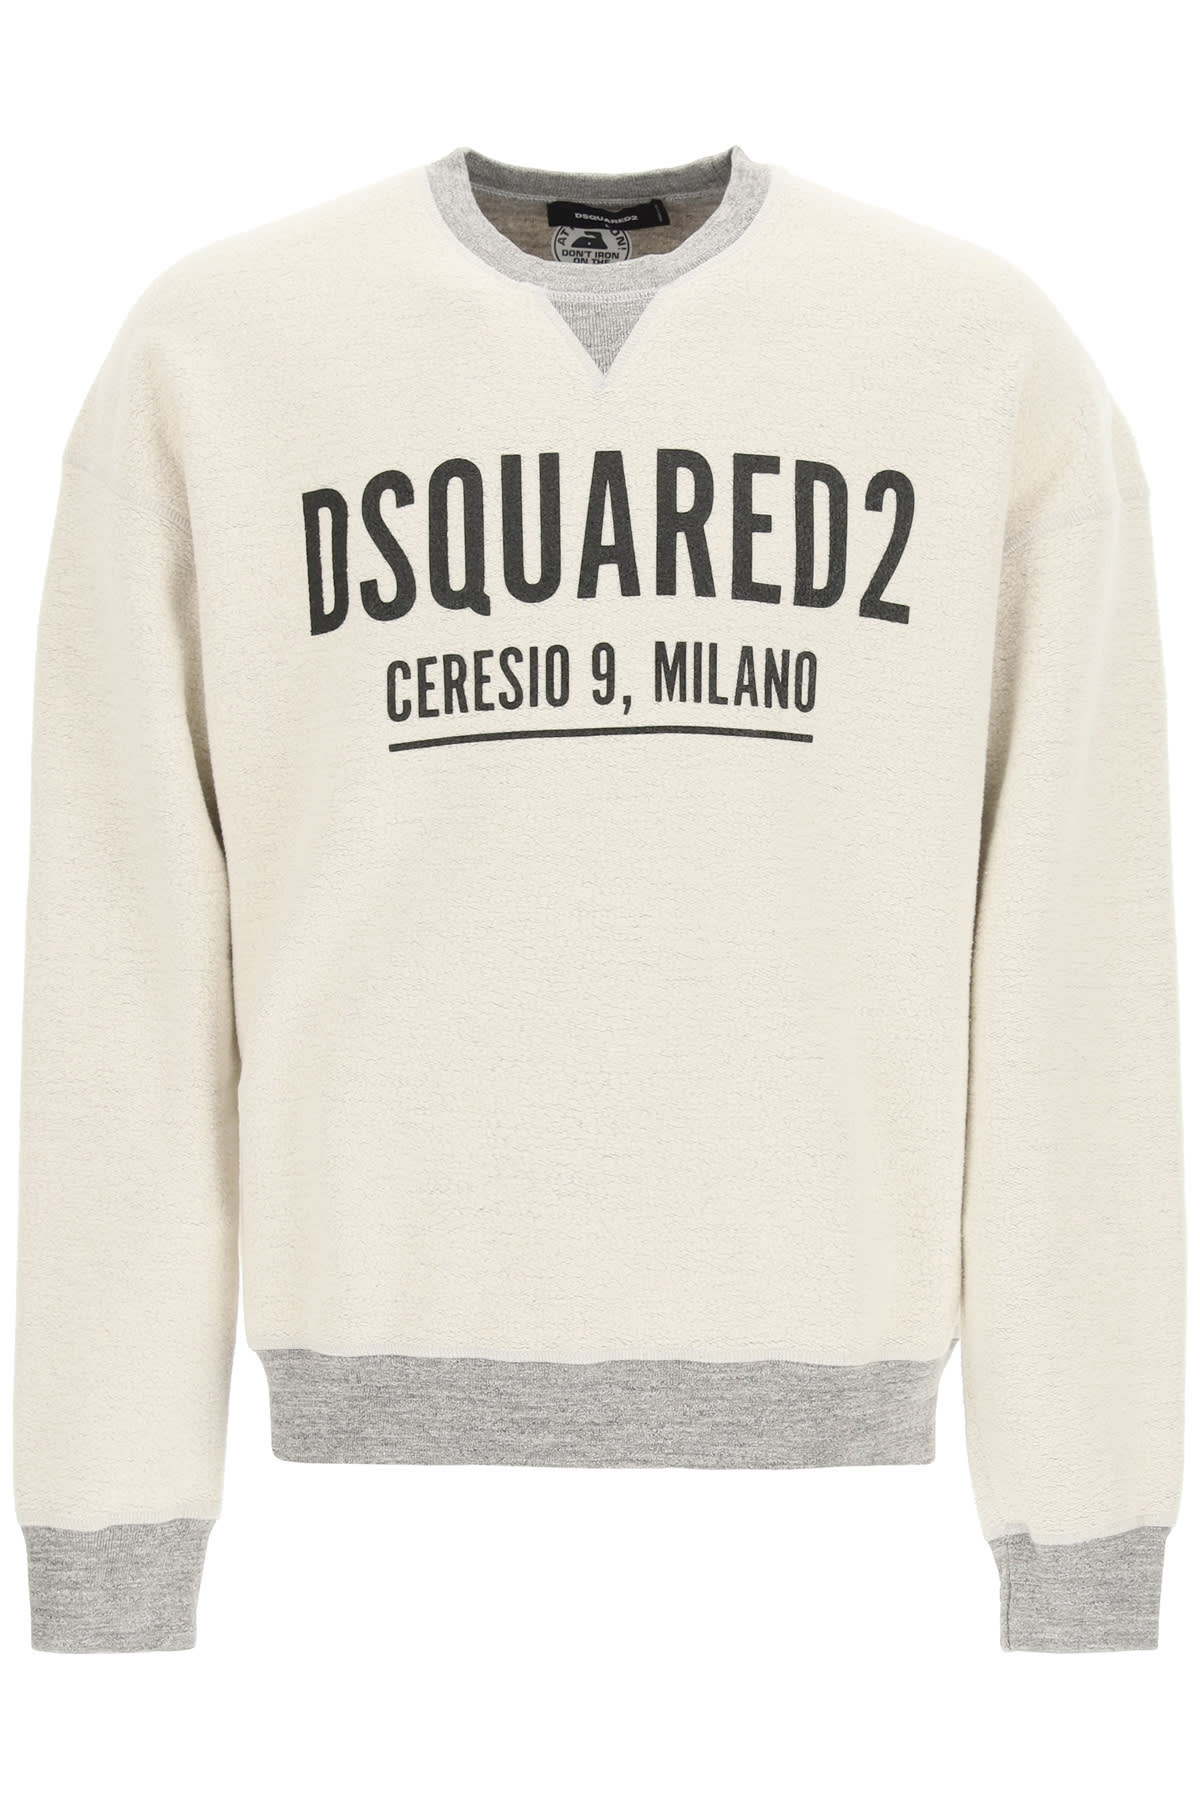 Dsquared2 Ceresio 9 Milano Sweatshirt